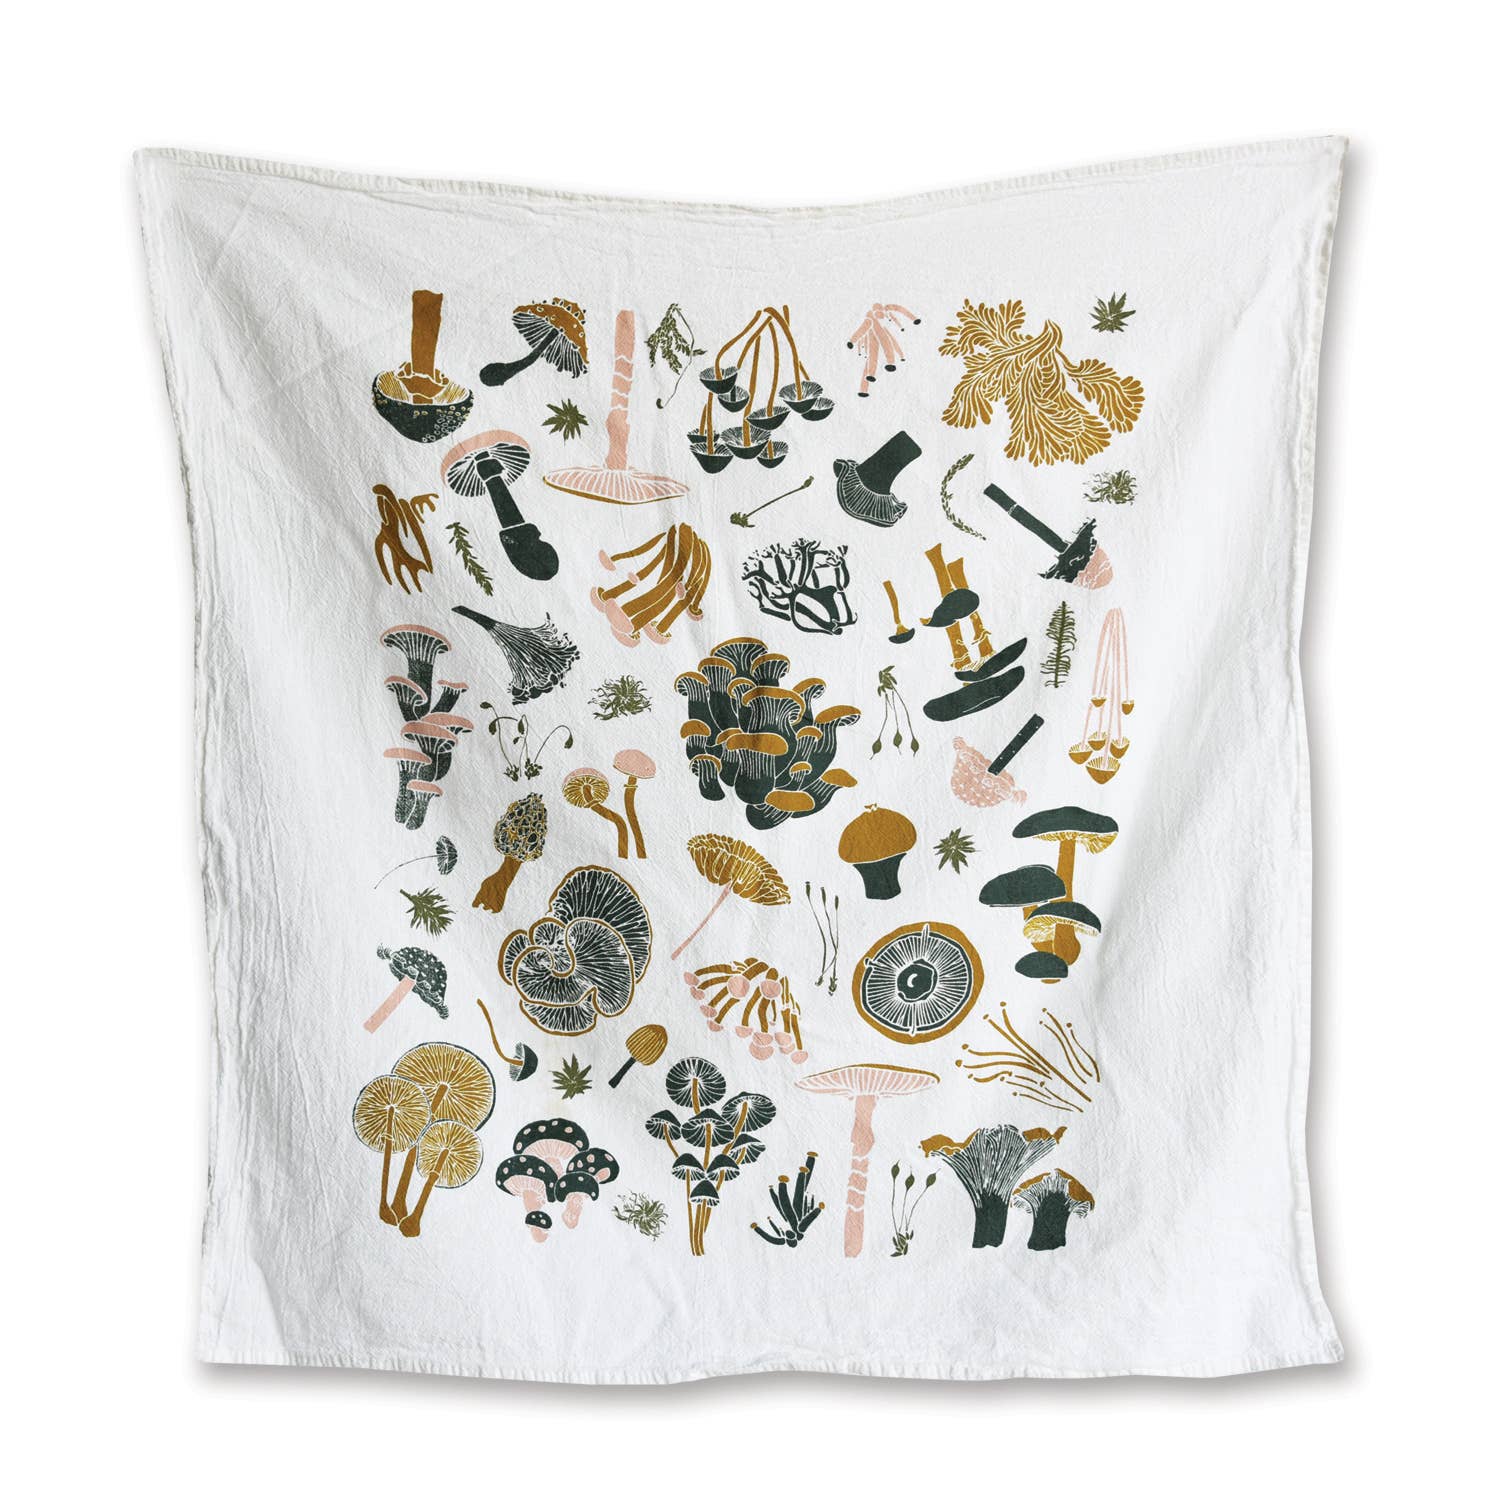 Mushroom Cotton Tea Towel - Navy – Indio Durham